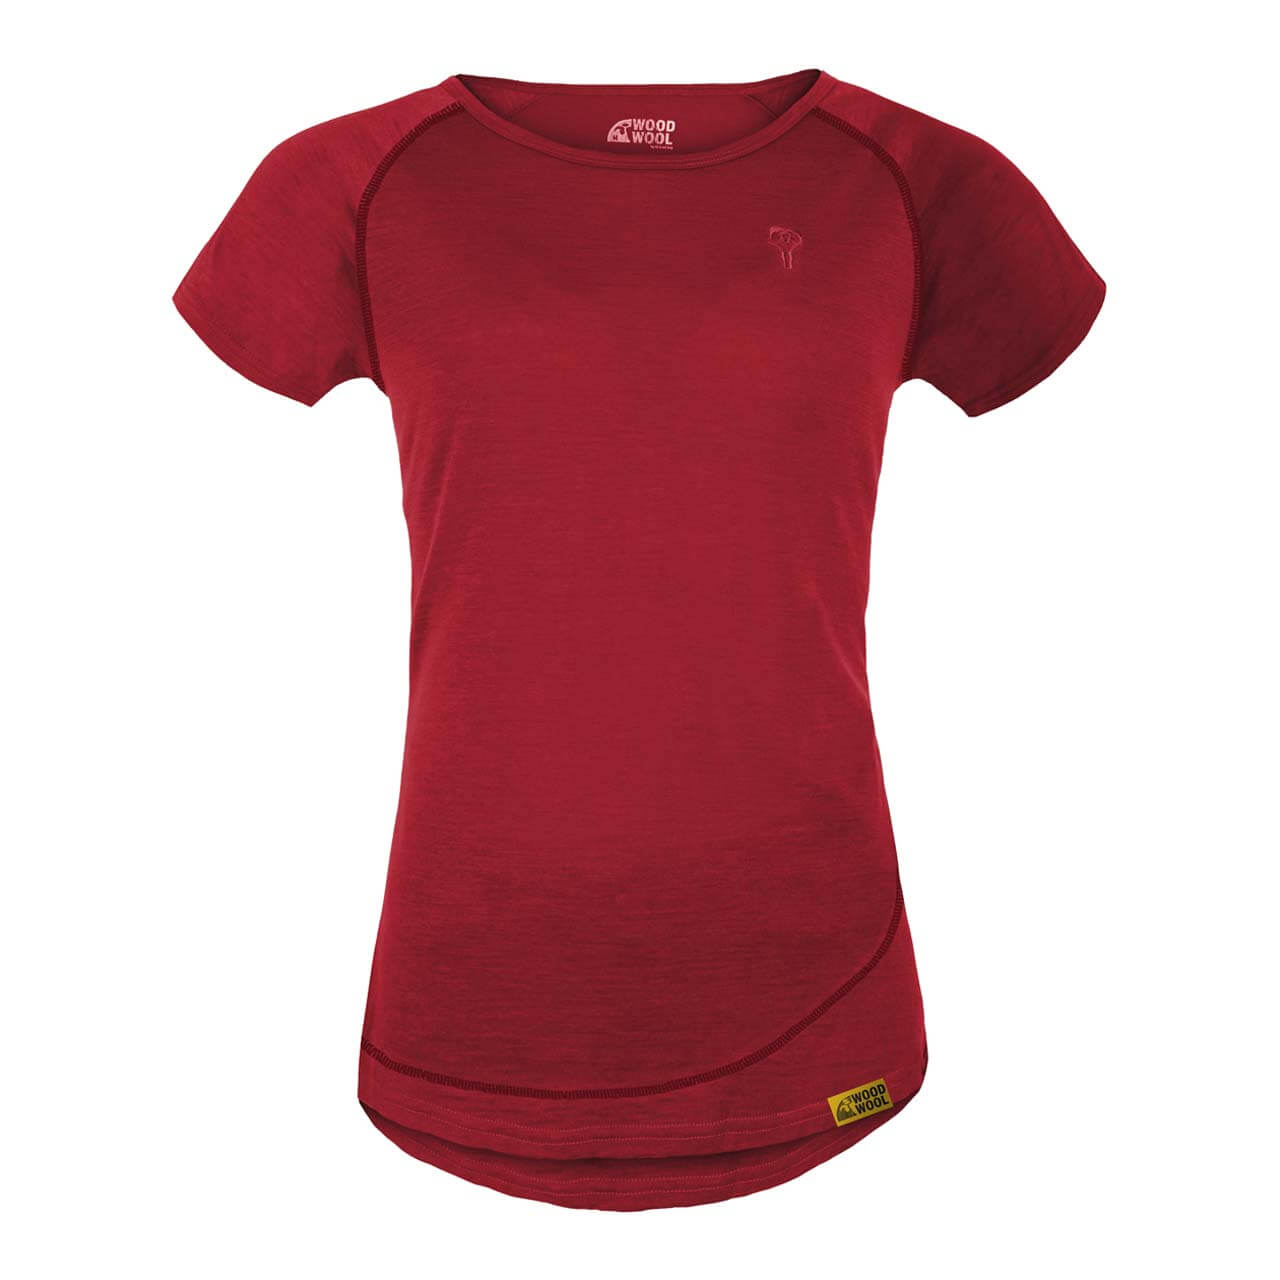 Grüezi Bag WoodWool T-Shirt Lady Burnham - Fired Red Brick, S von Grüezi Bag